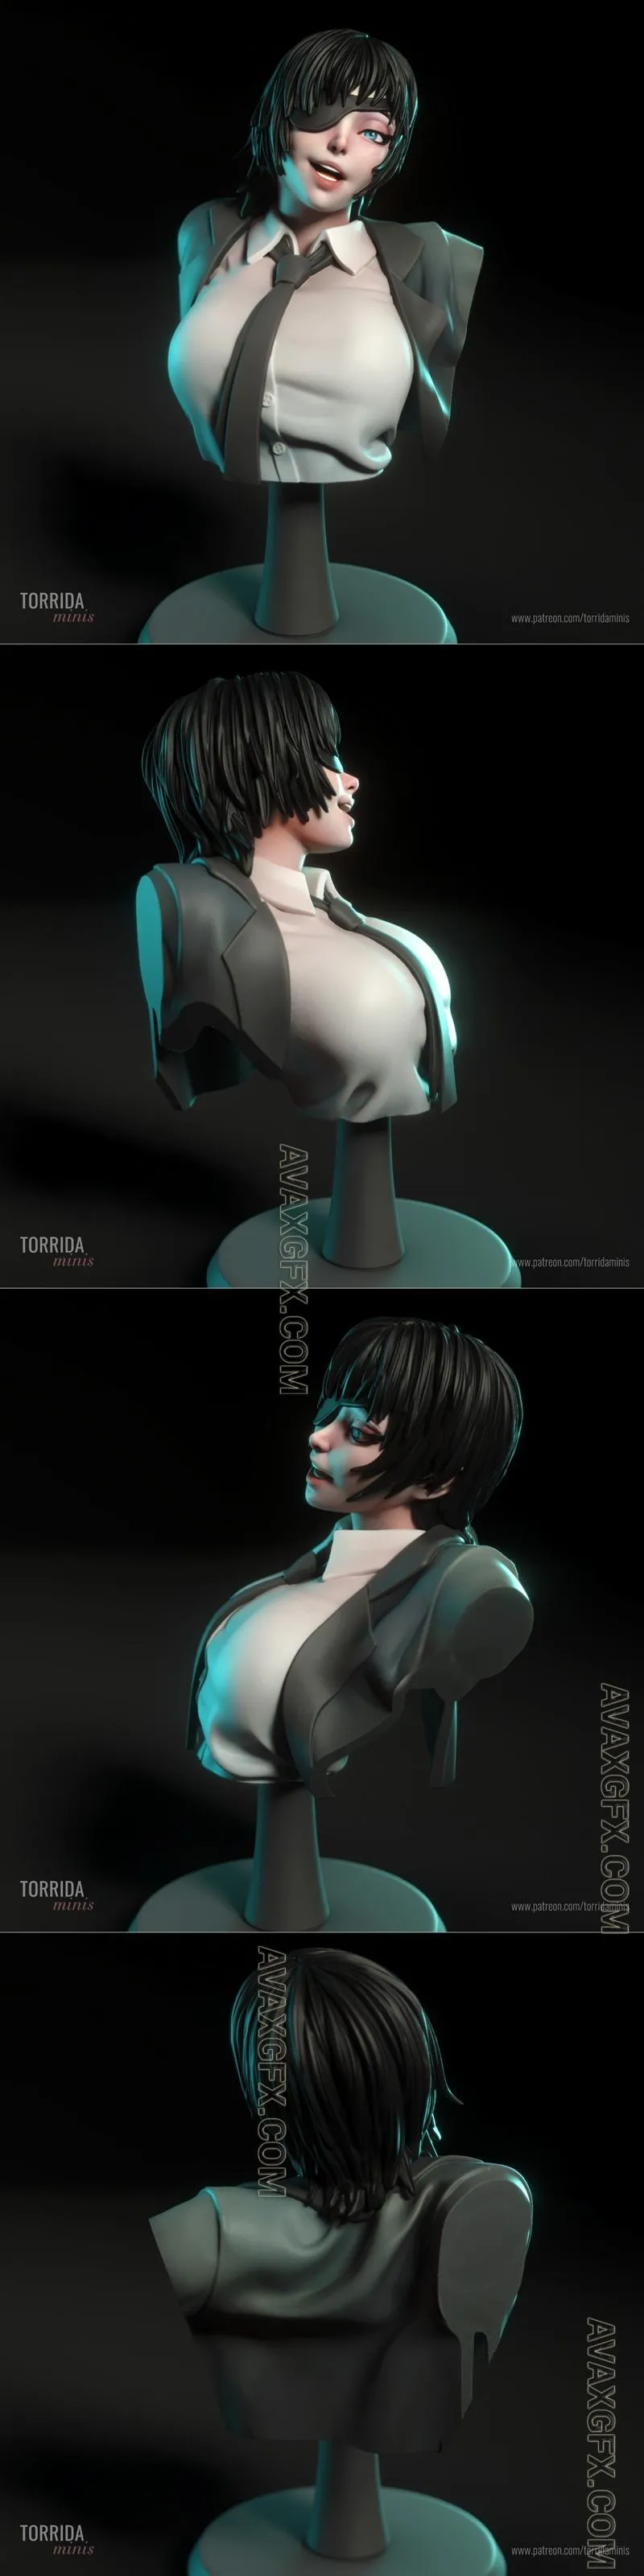 Torrida Minis - Himeko Bust - STL 3D Model